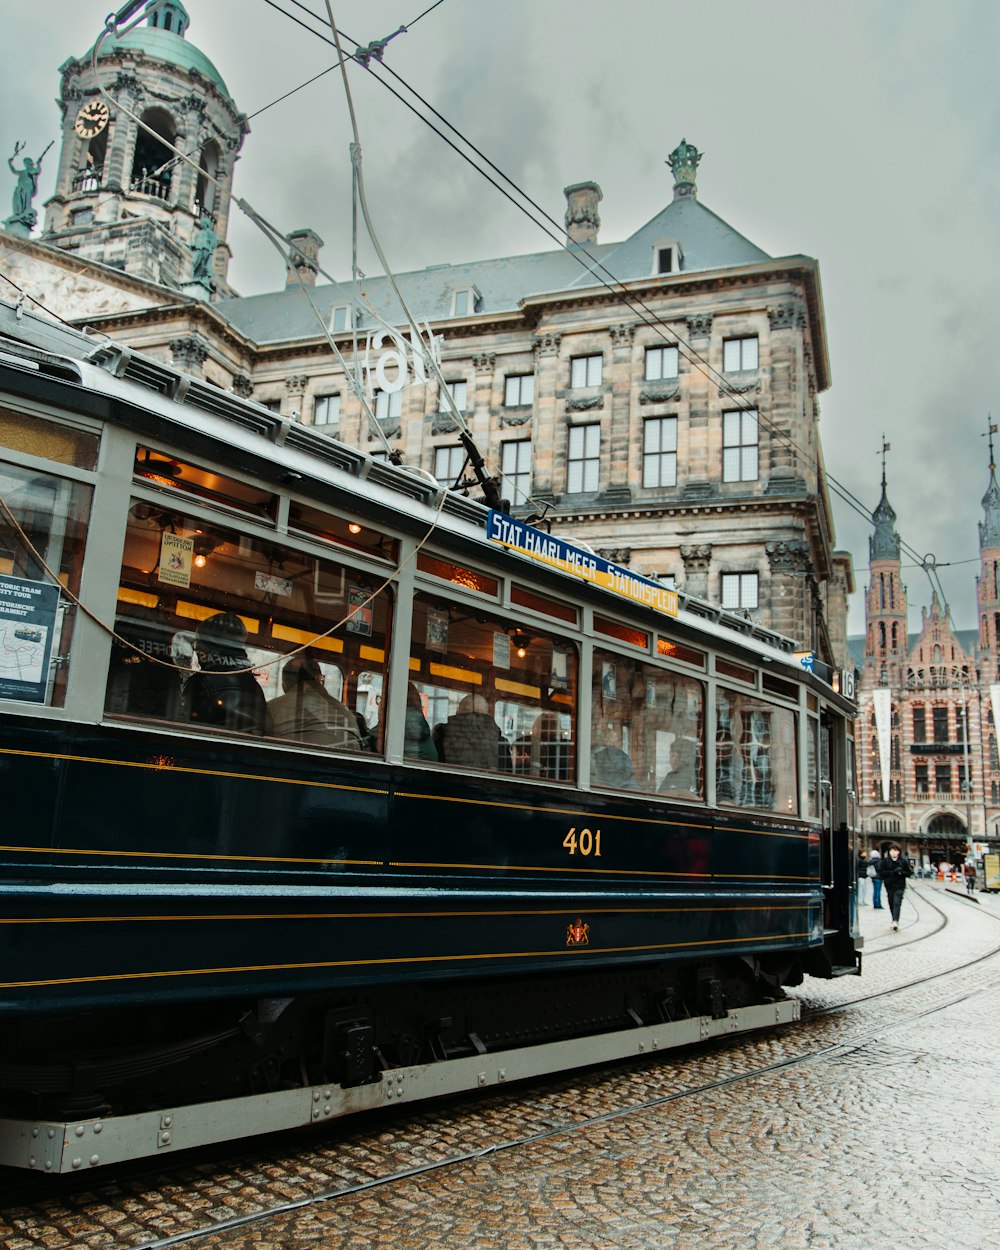 a trolley car on a cobblestone street in a european city